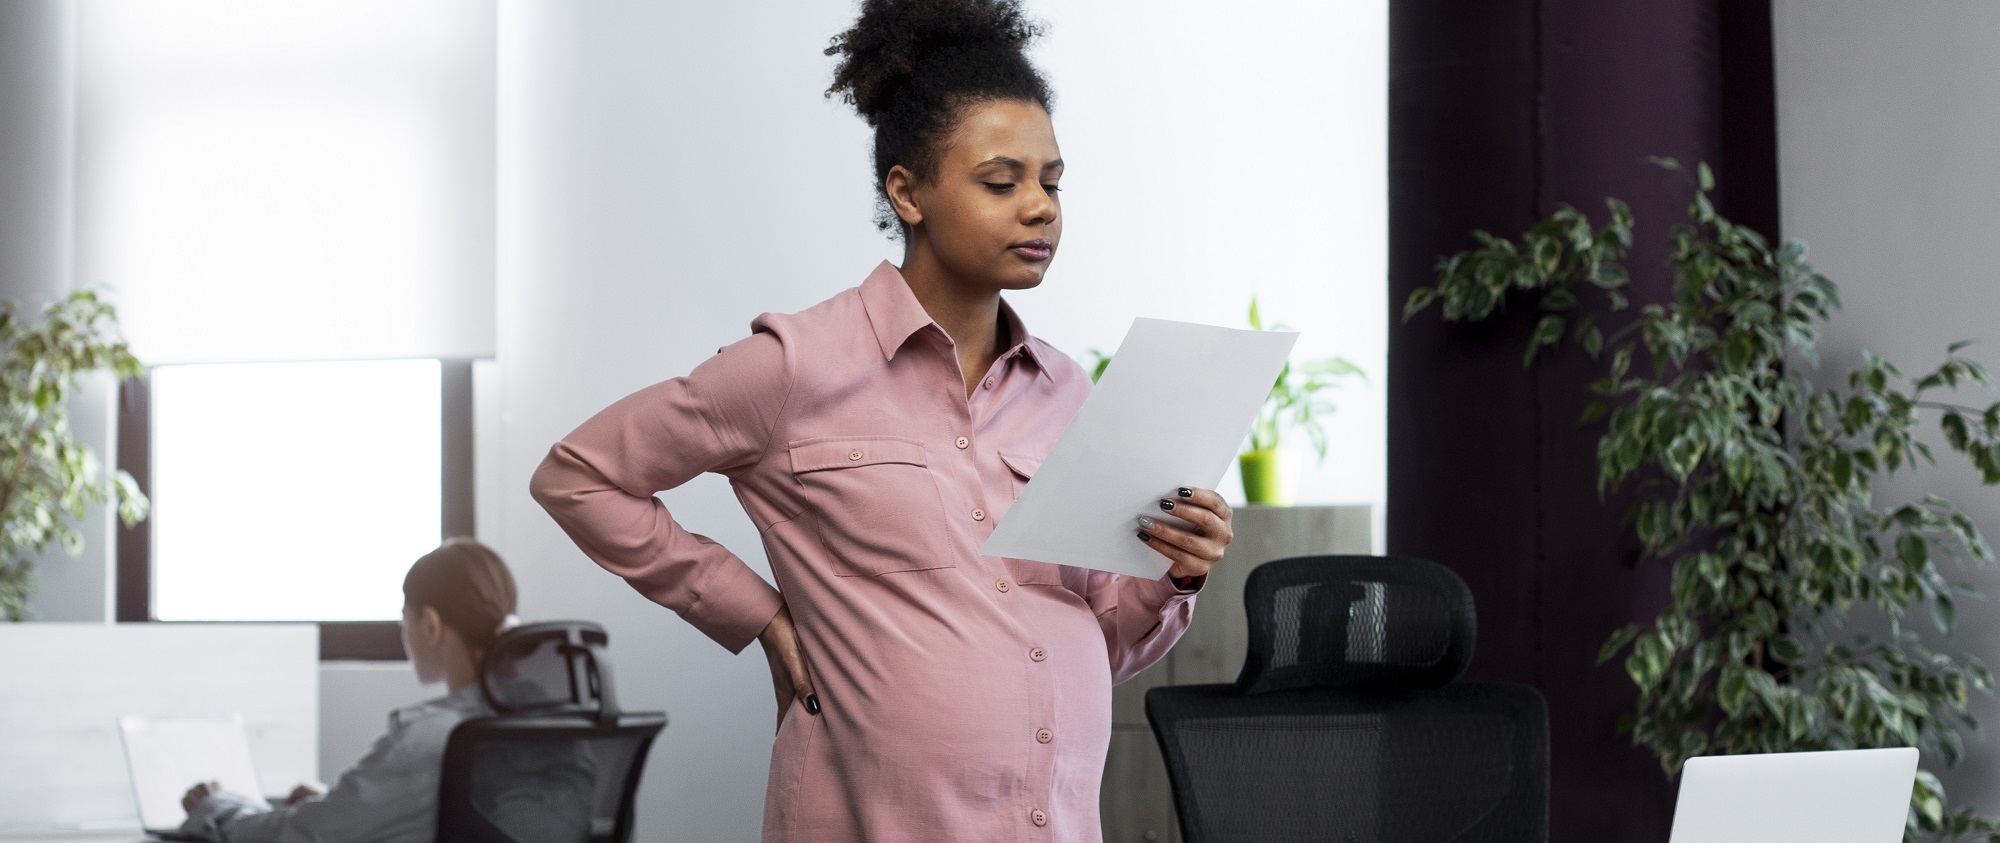 evers arbeiten in der schwangerschaft das mutterschutzgesetz kurz erklaert